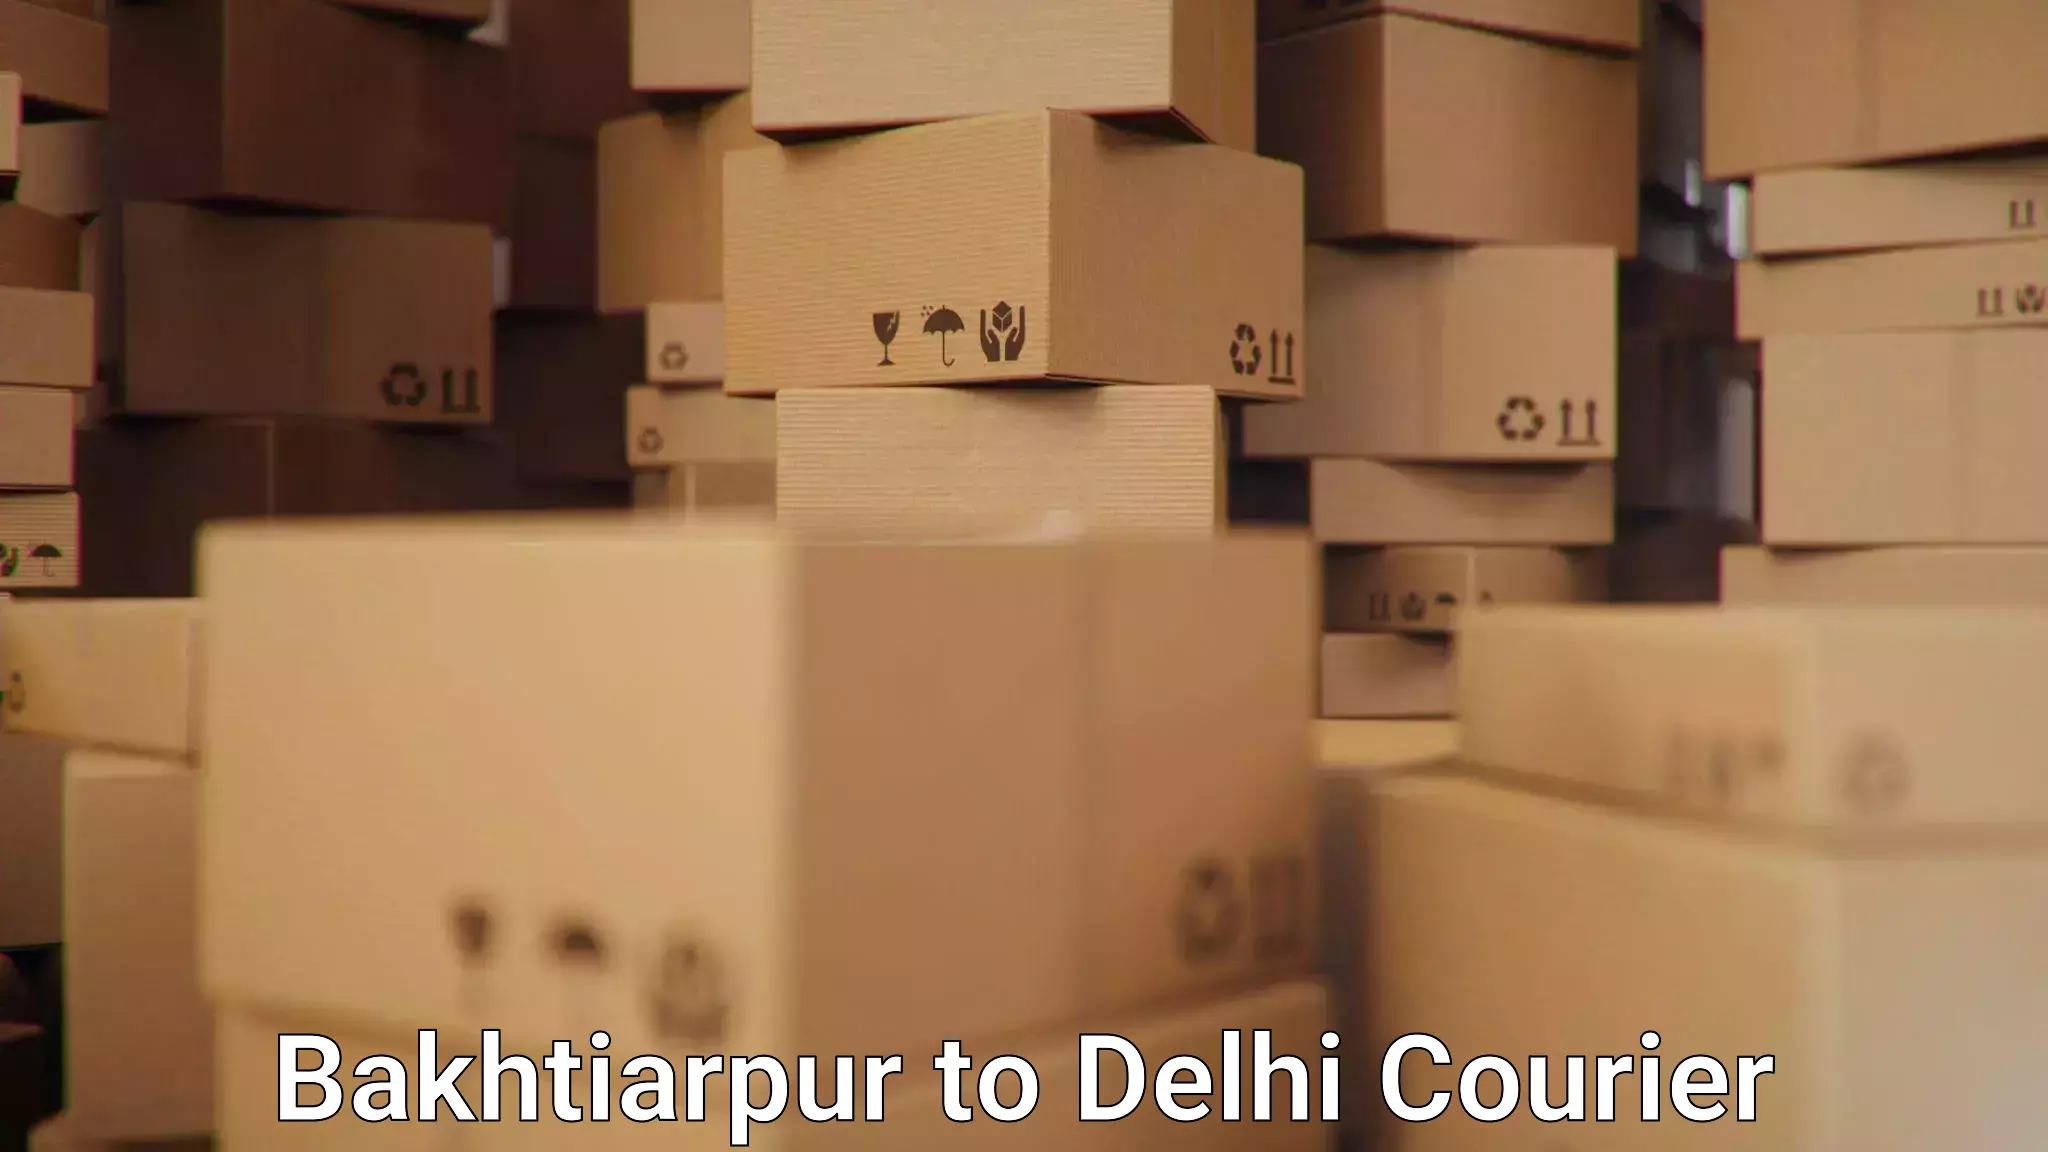 Scalable shipping solutions Bakhtiarpur to IIT Delhi